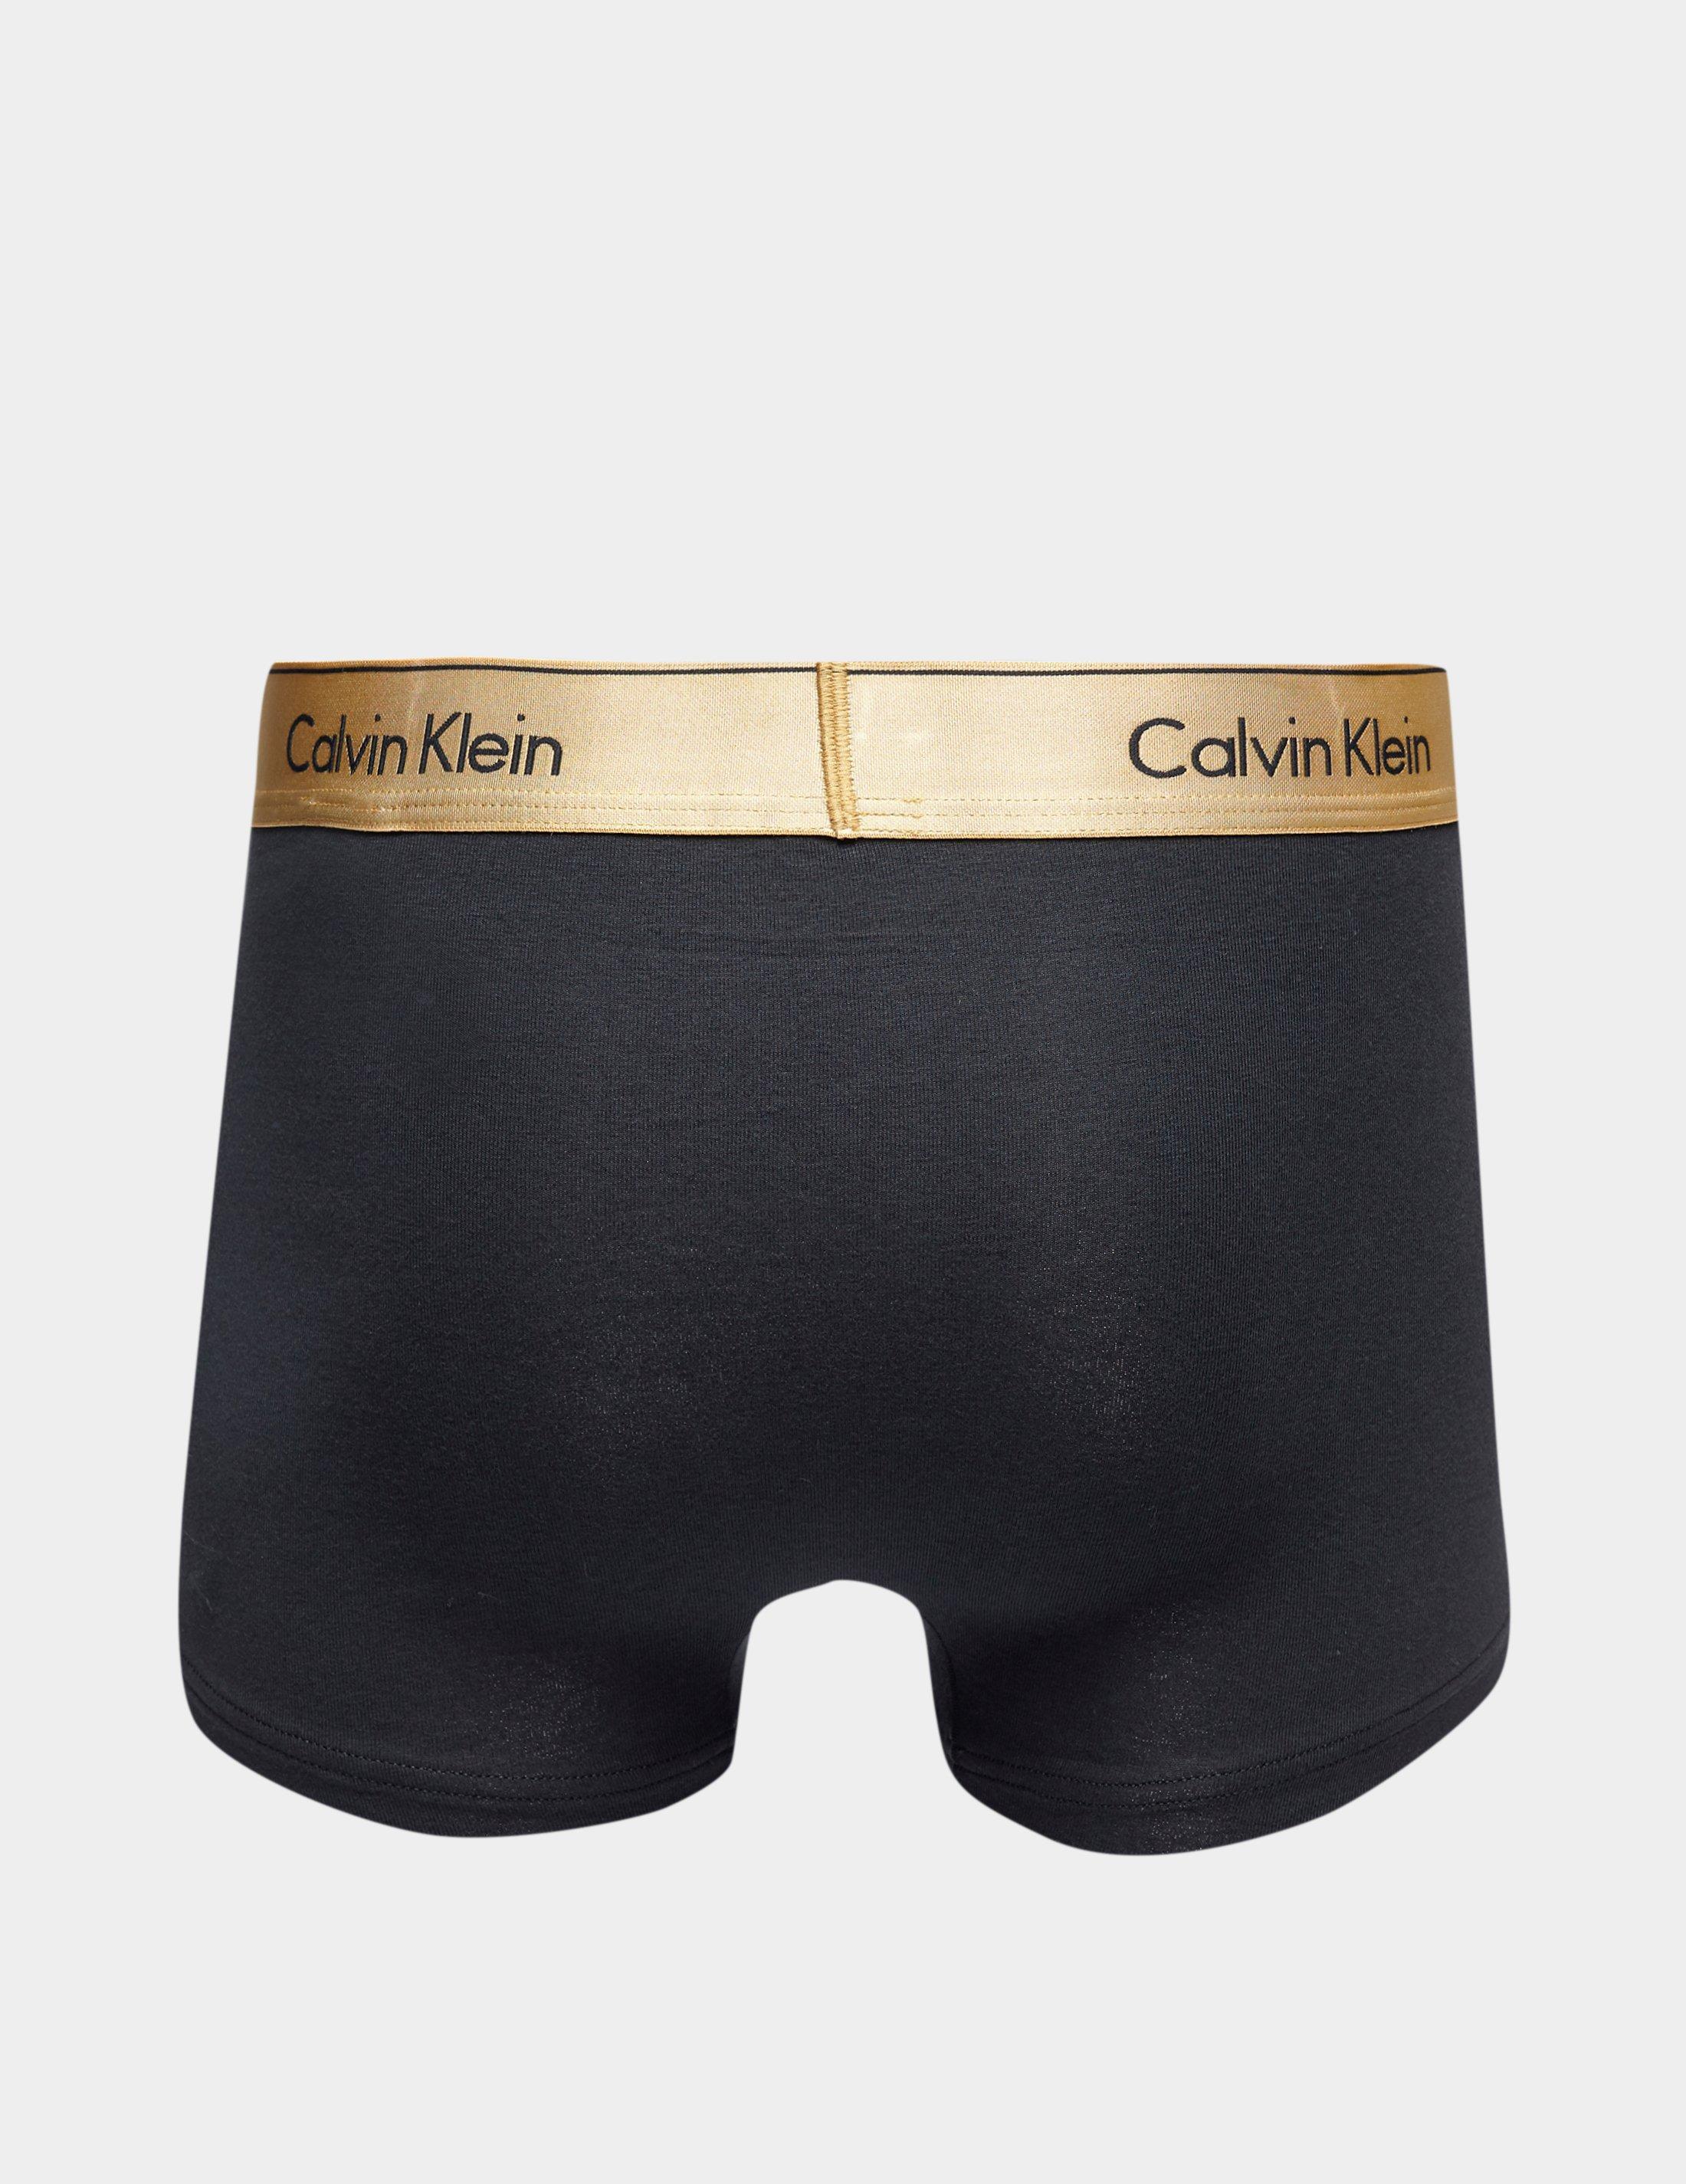 Suffix Discrimination confusion Calvin Klein Gold Waistband Boxer Shorts Black for Men | Lyst